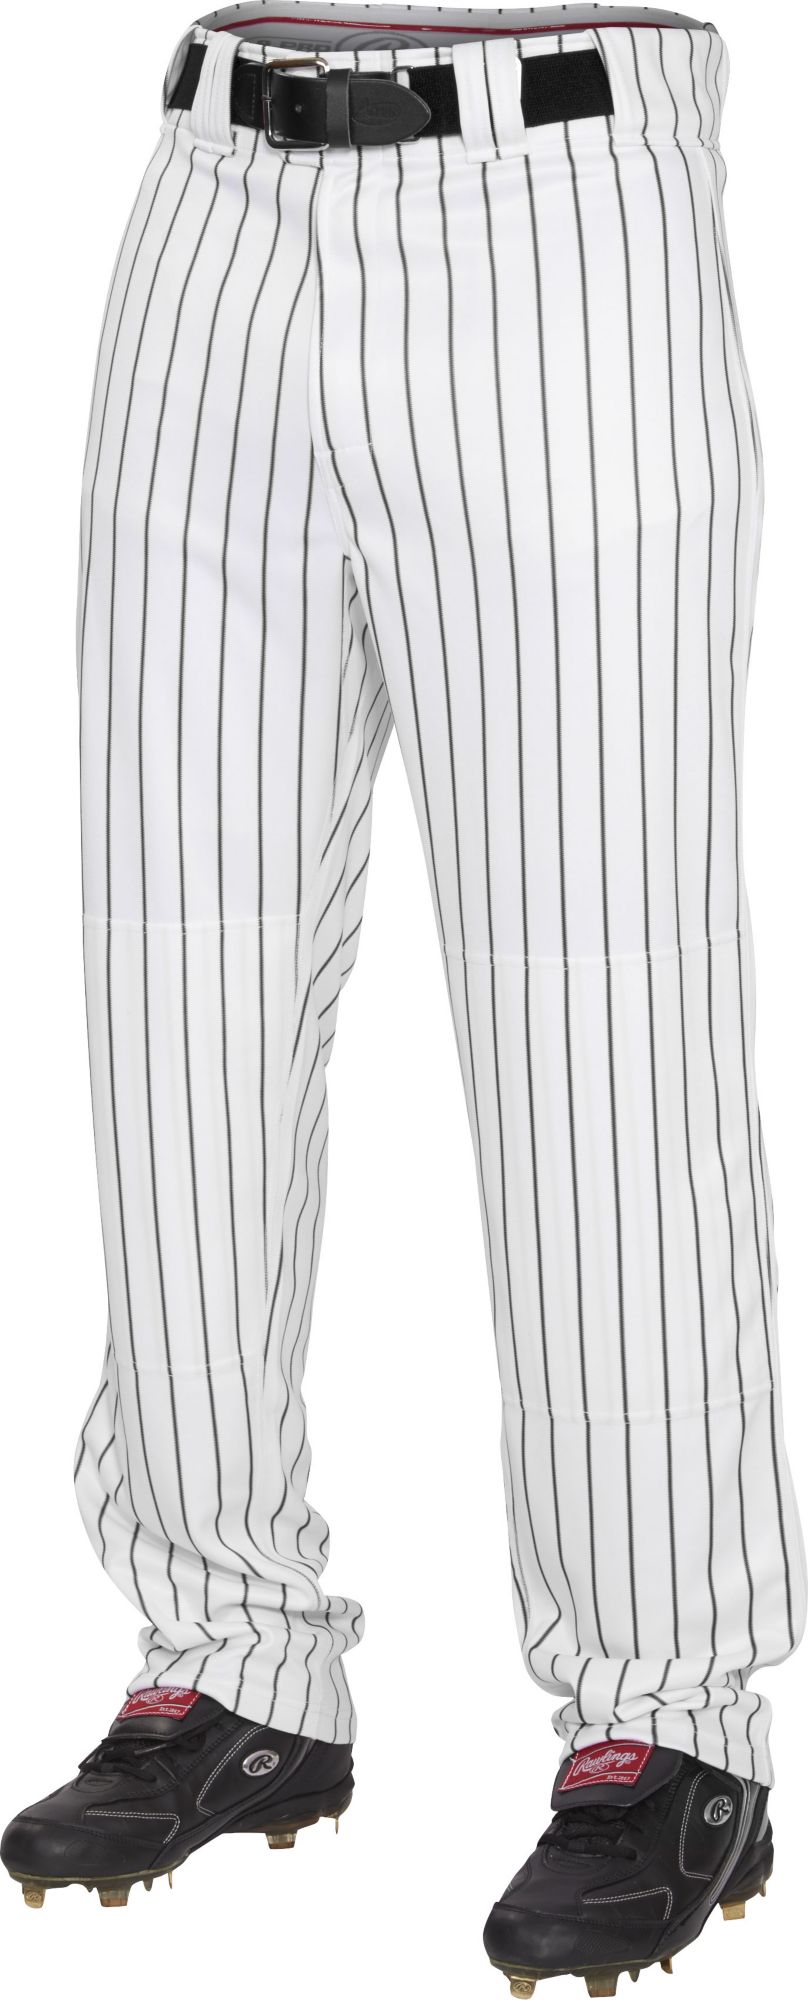 pinstripe pants black and white